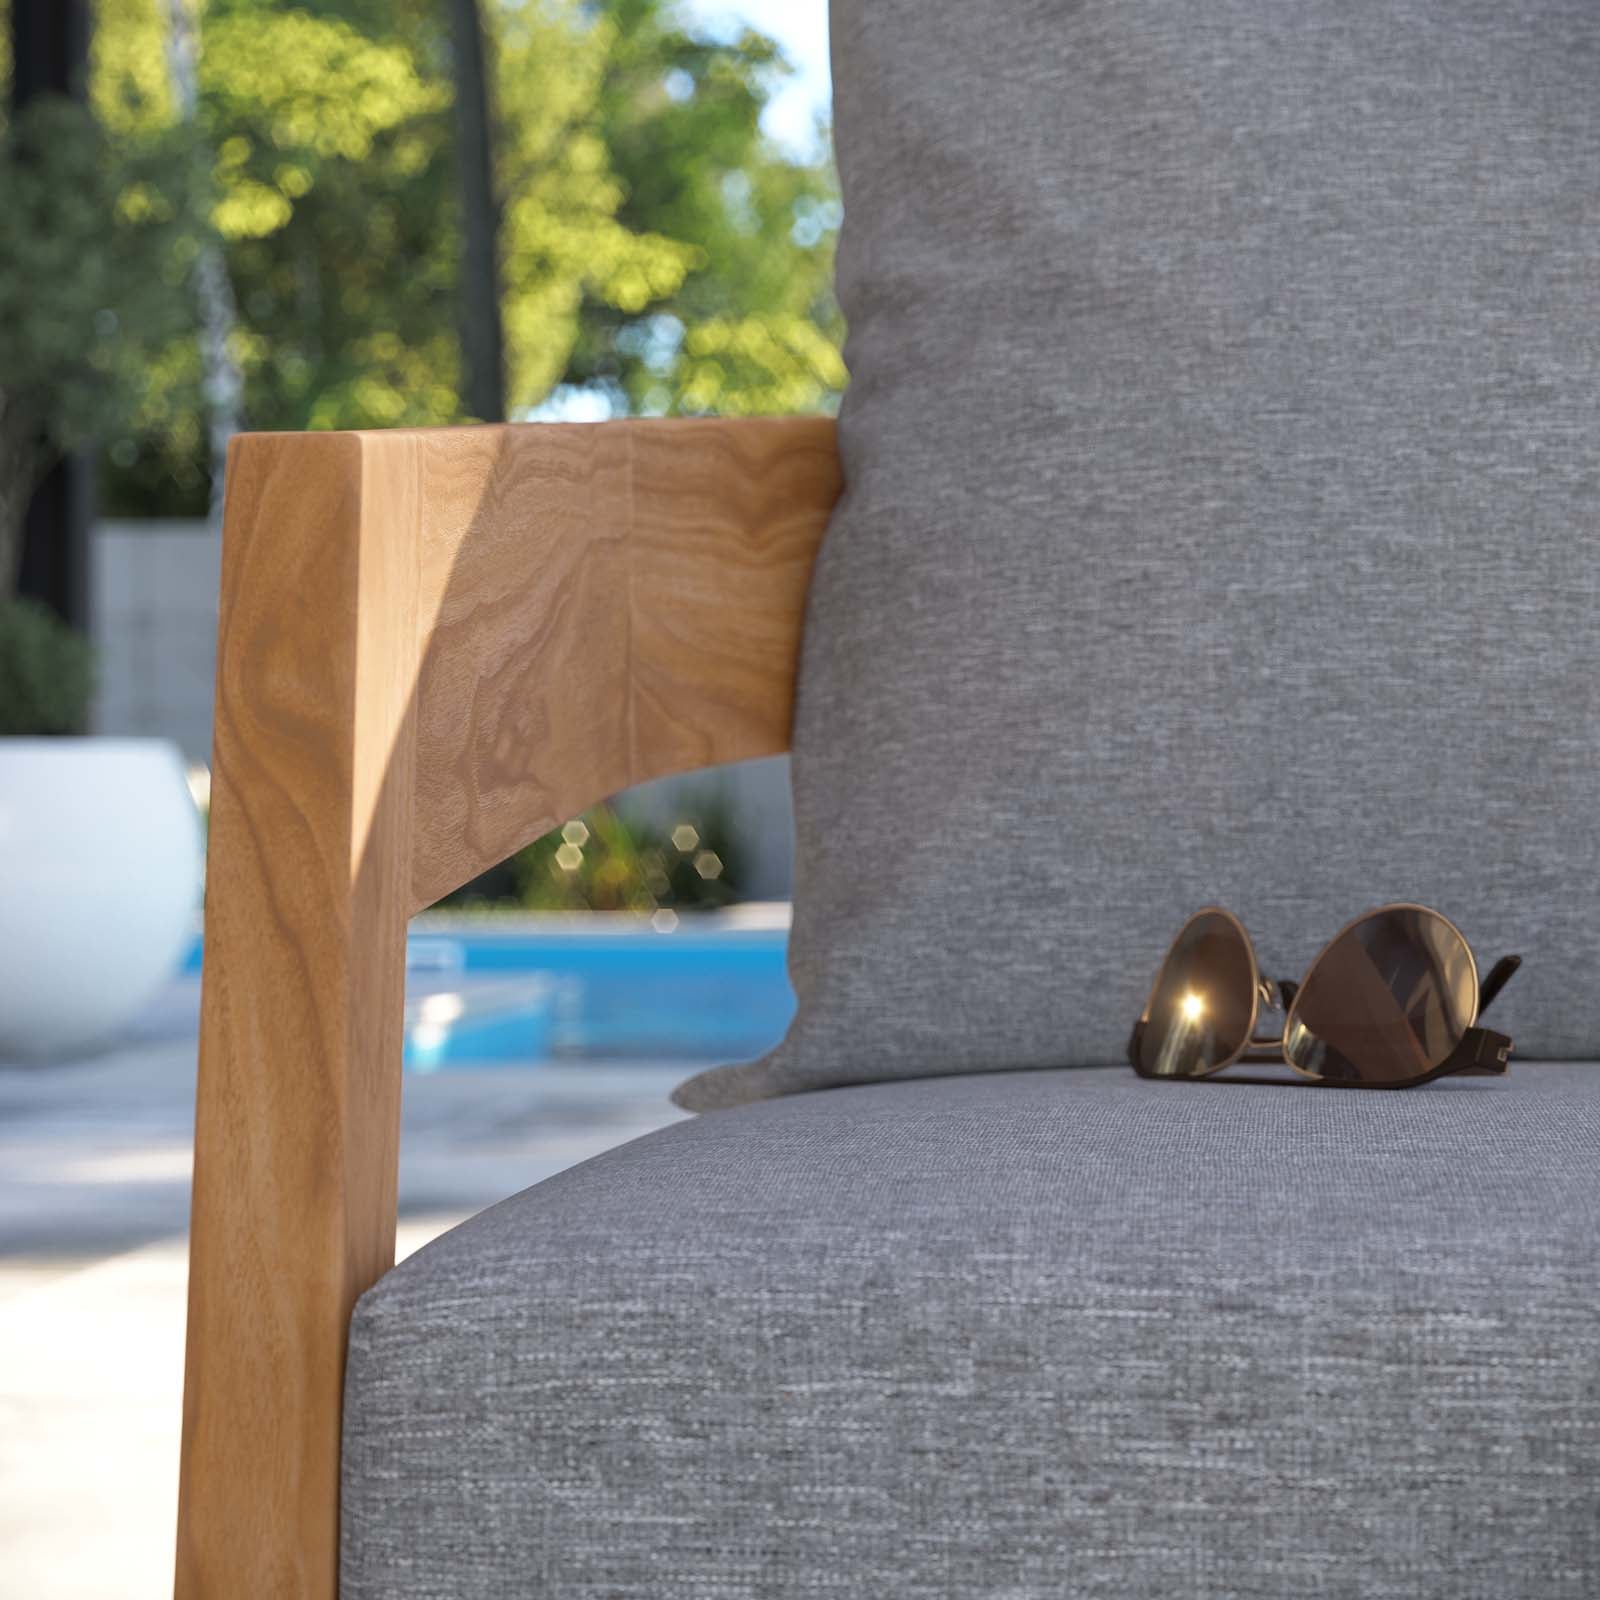 Brisbane Teak Wood Outdoor Patio Armchair - East Shore Modern Home Furnishings